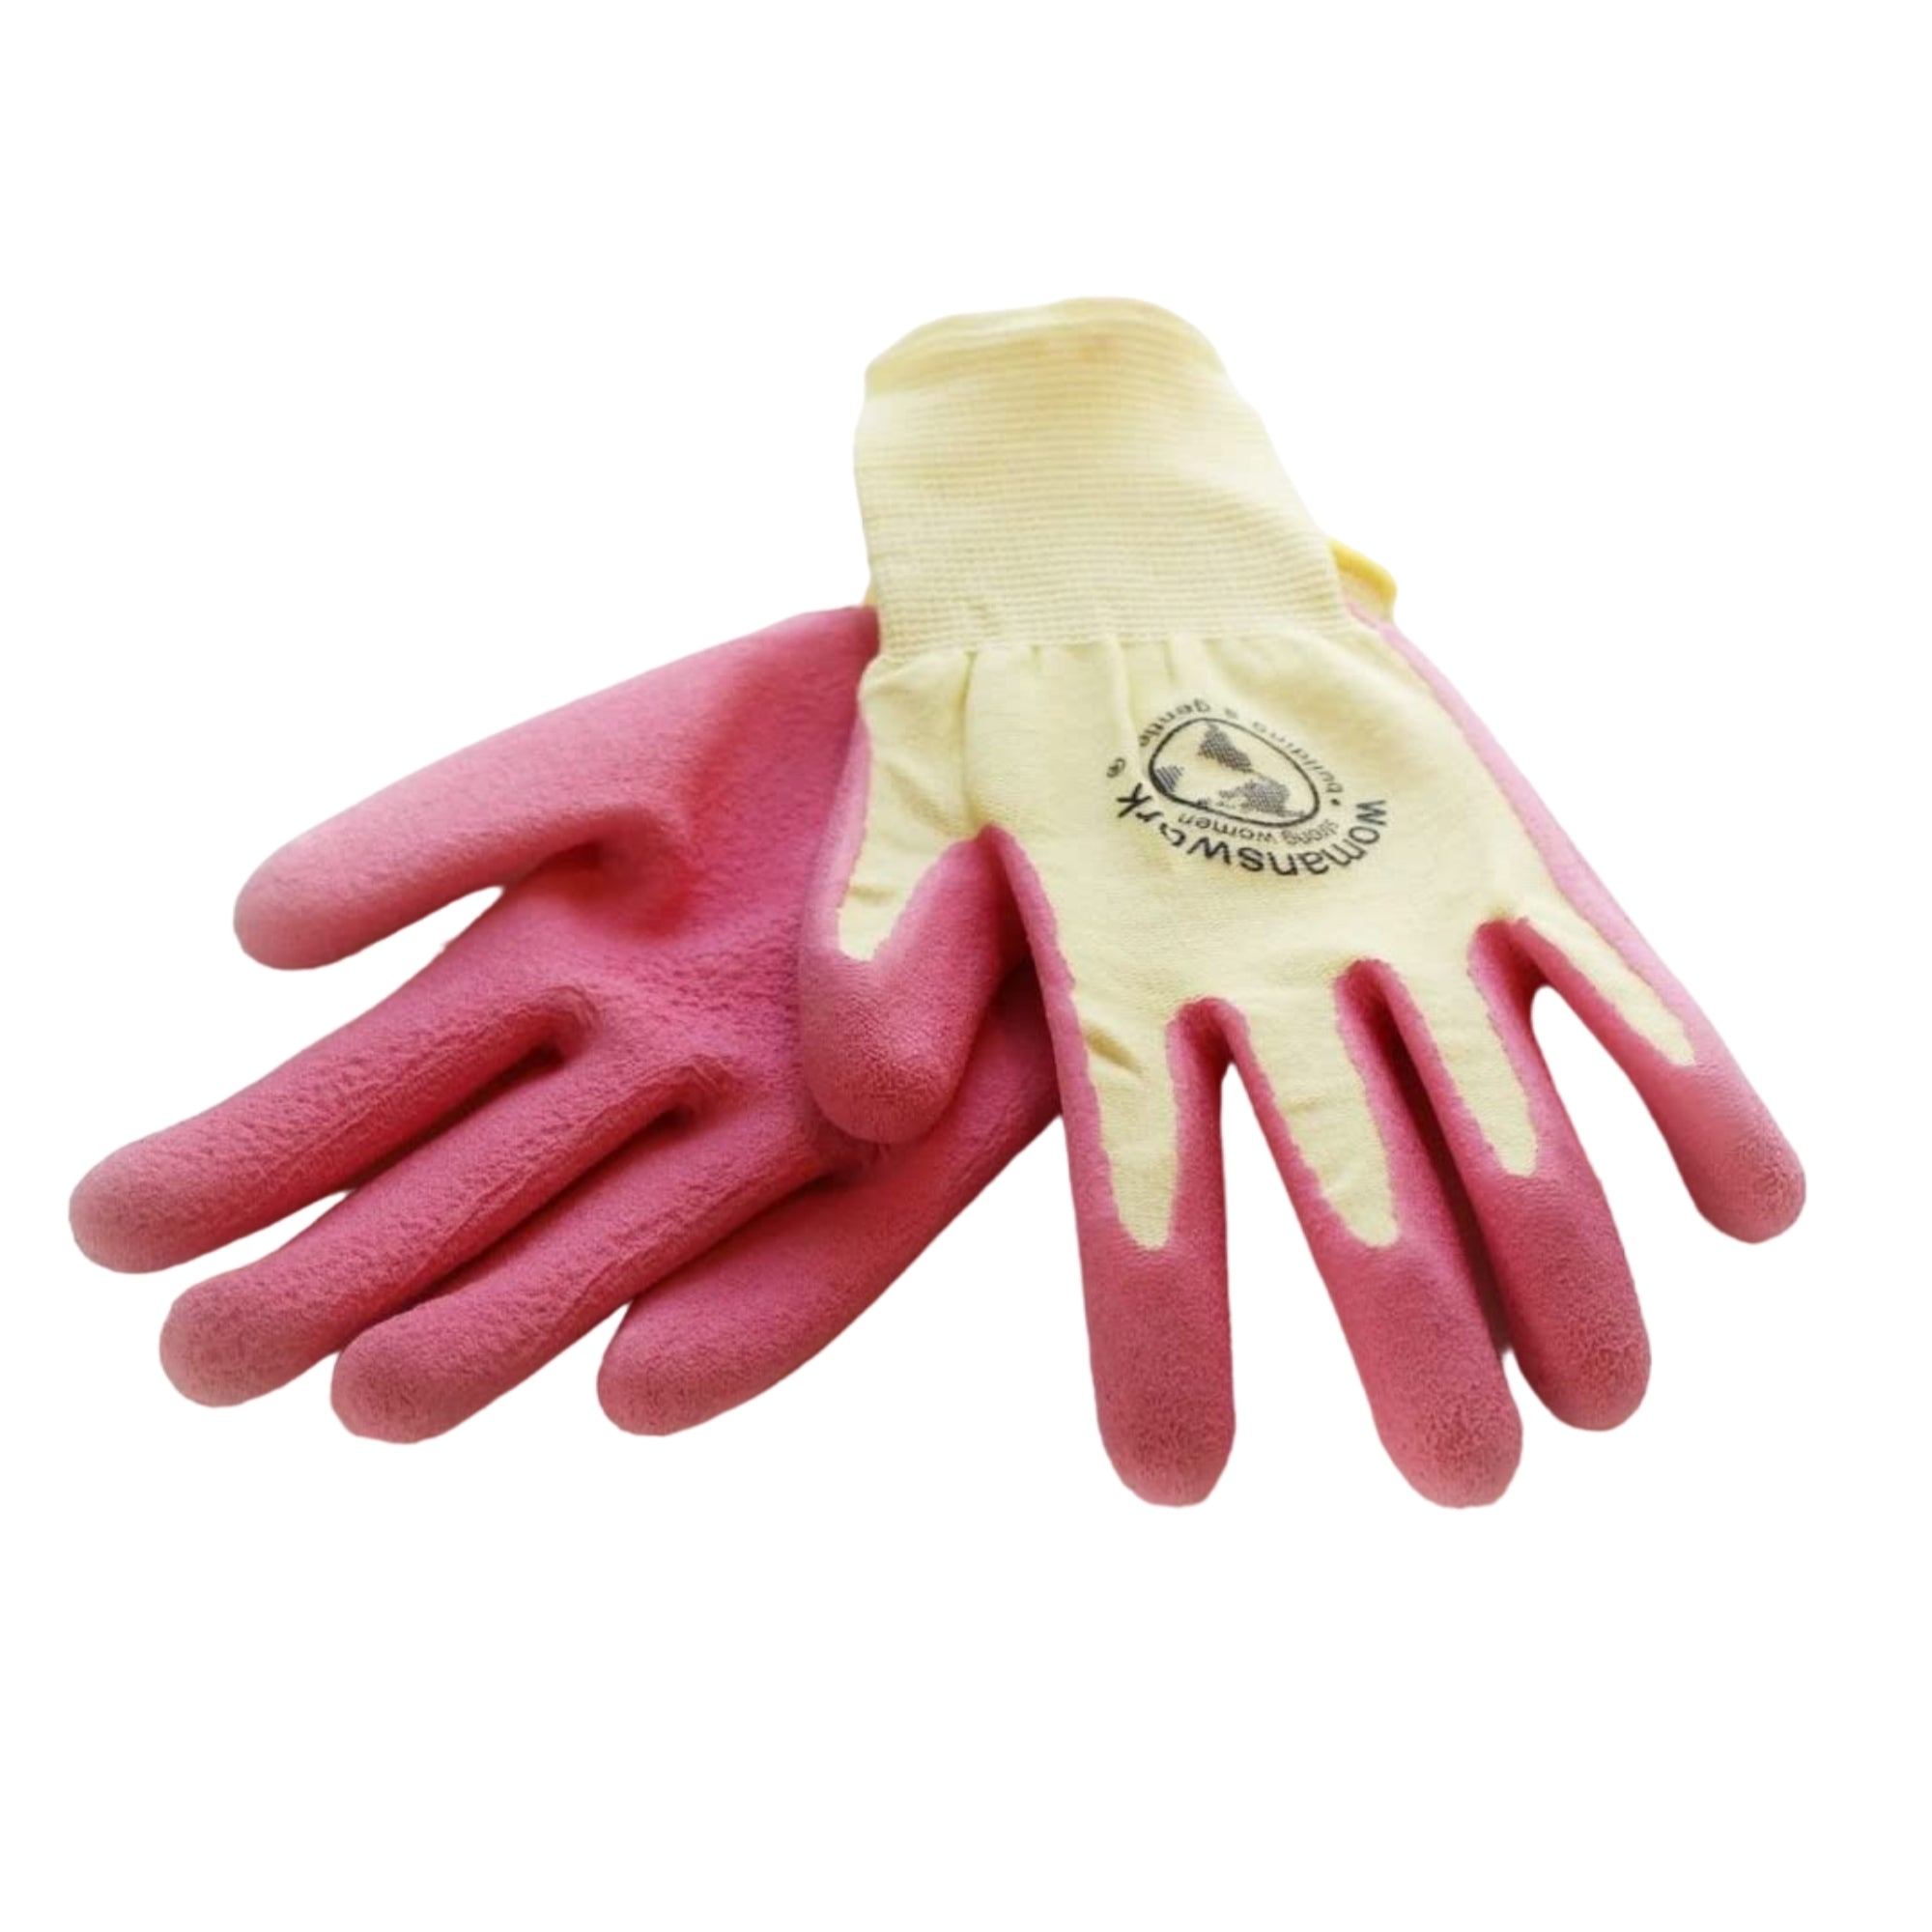 Womanswork Gardening Protective Weeding Gloves, Pink, Medium (Pack of 1)